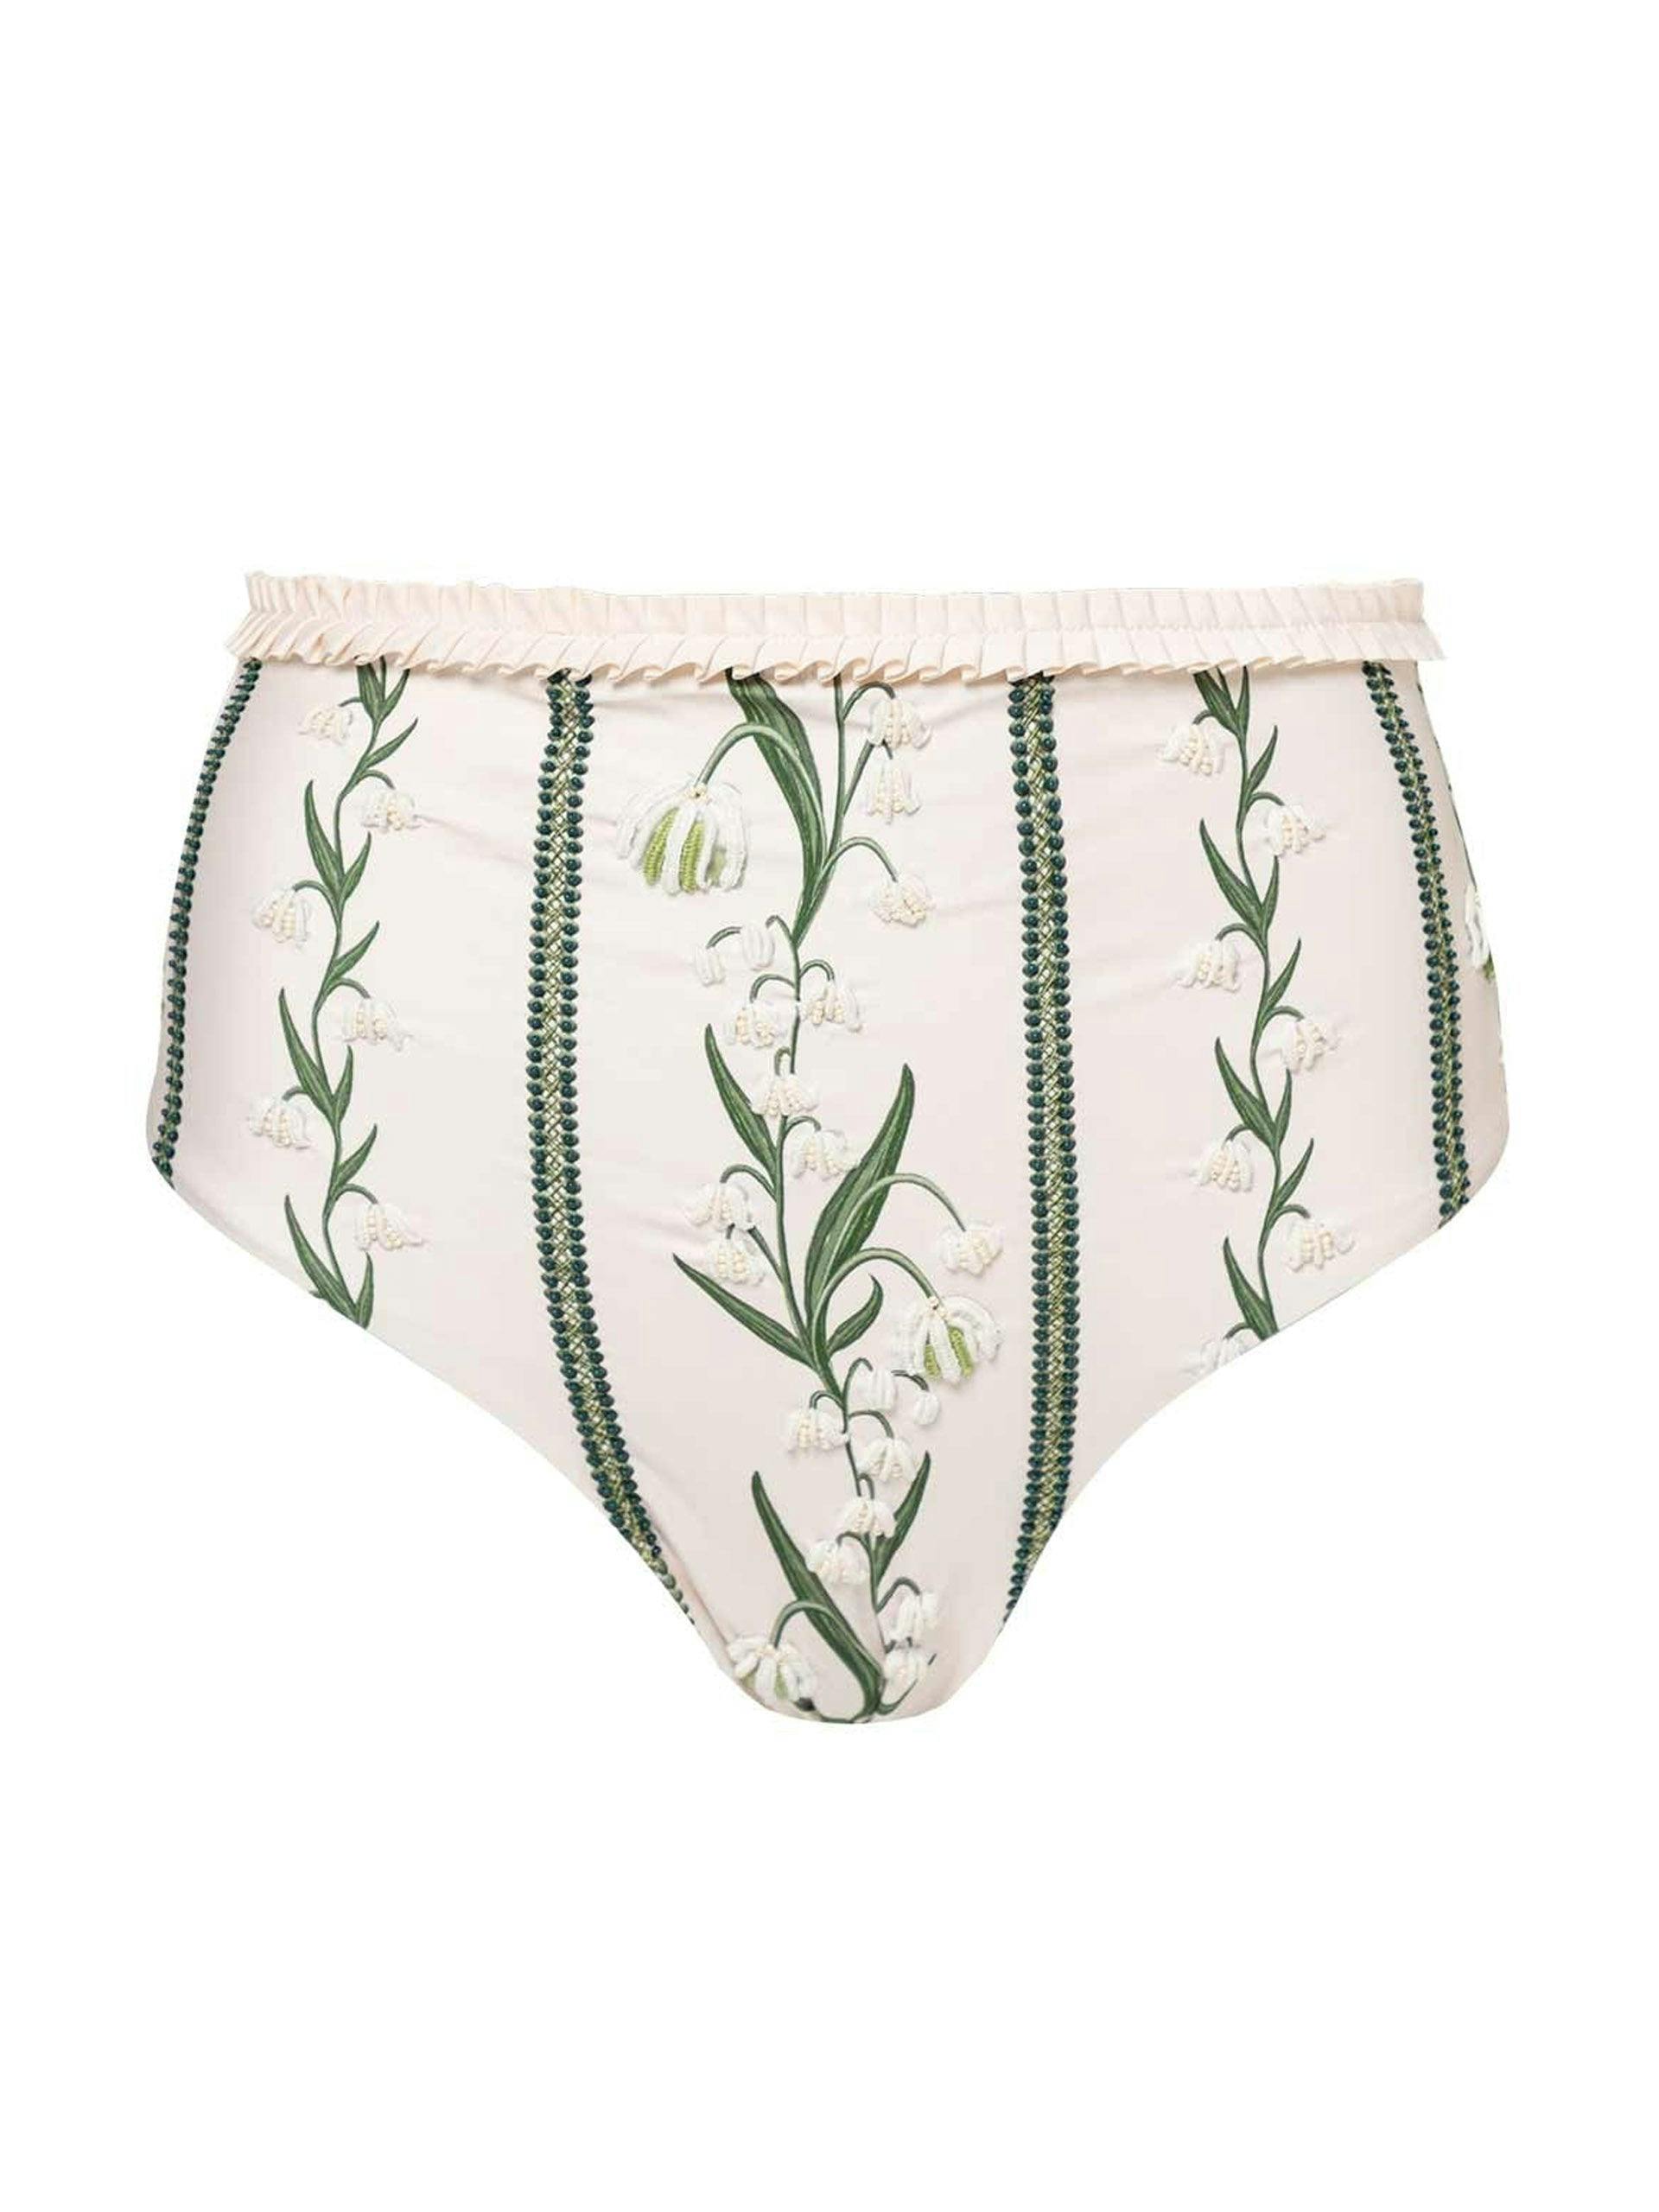 Nopal Perla embroidered bikini bottom